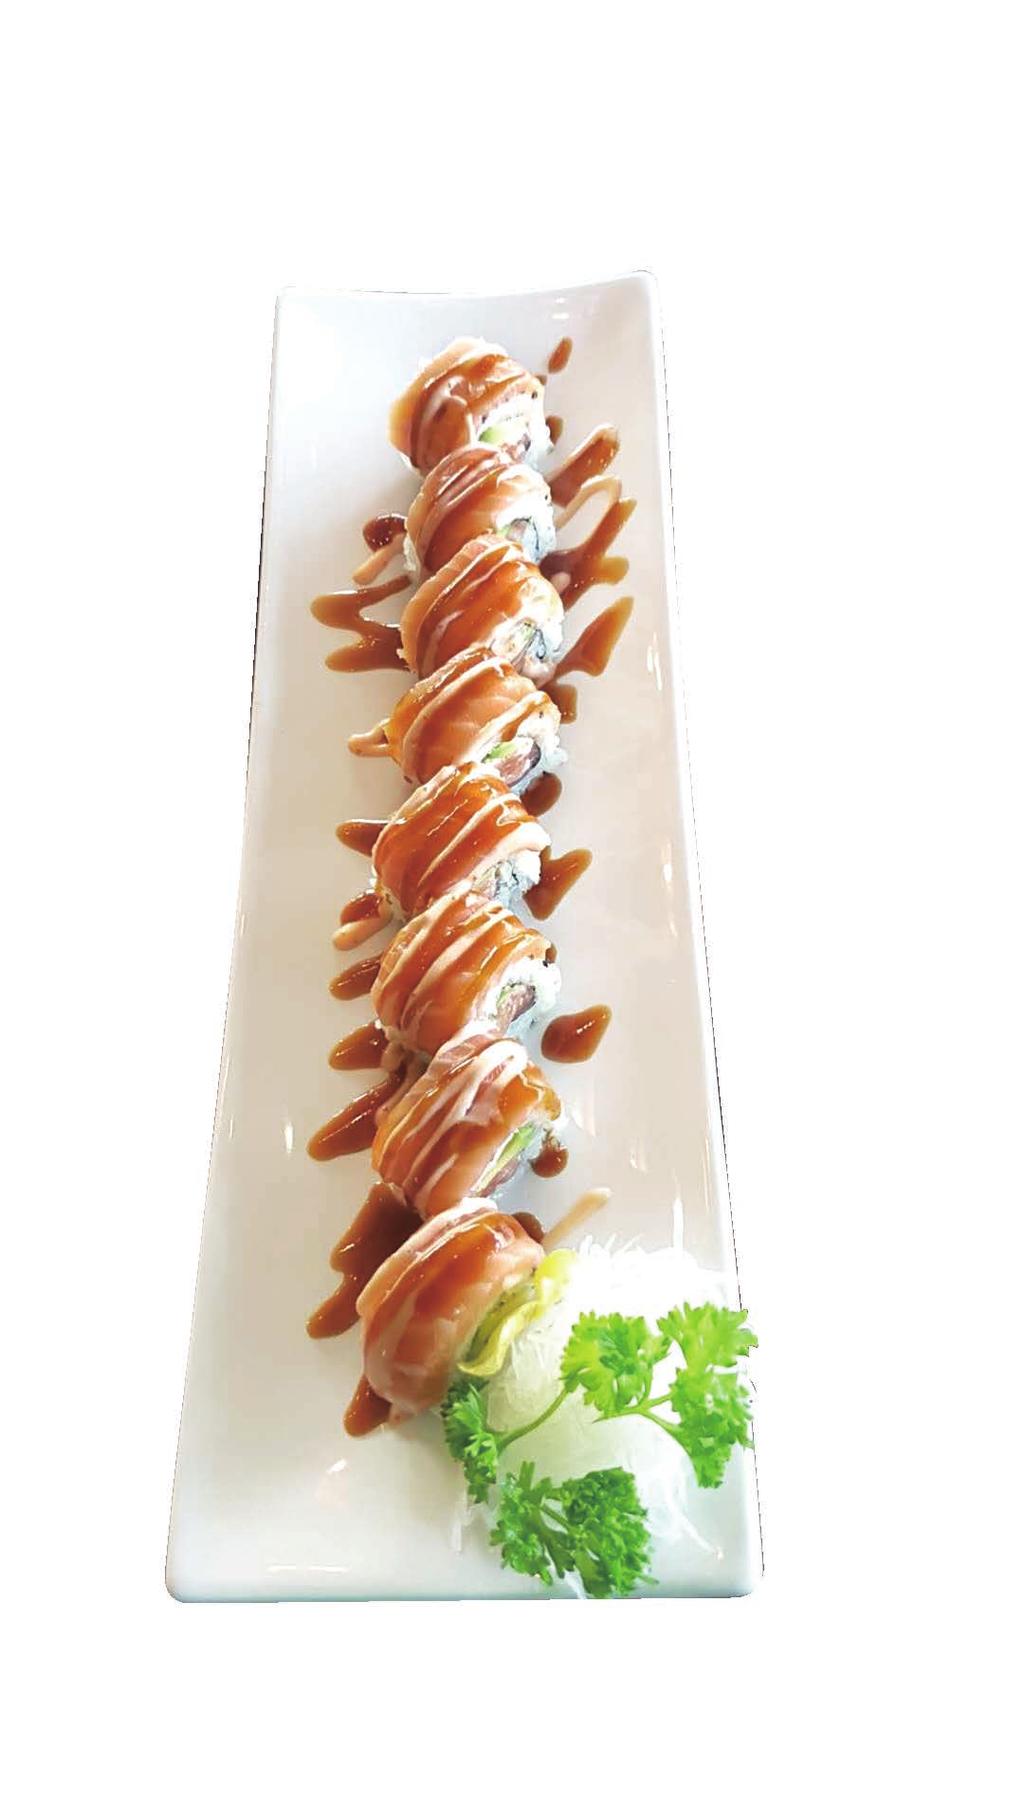 URAMAKI (sushi arrotolato con alga nera interna 8 pz) UM13. Crunchy California 7.50 UM14. Miura UM15. Yasaitem 8.